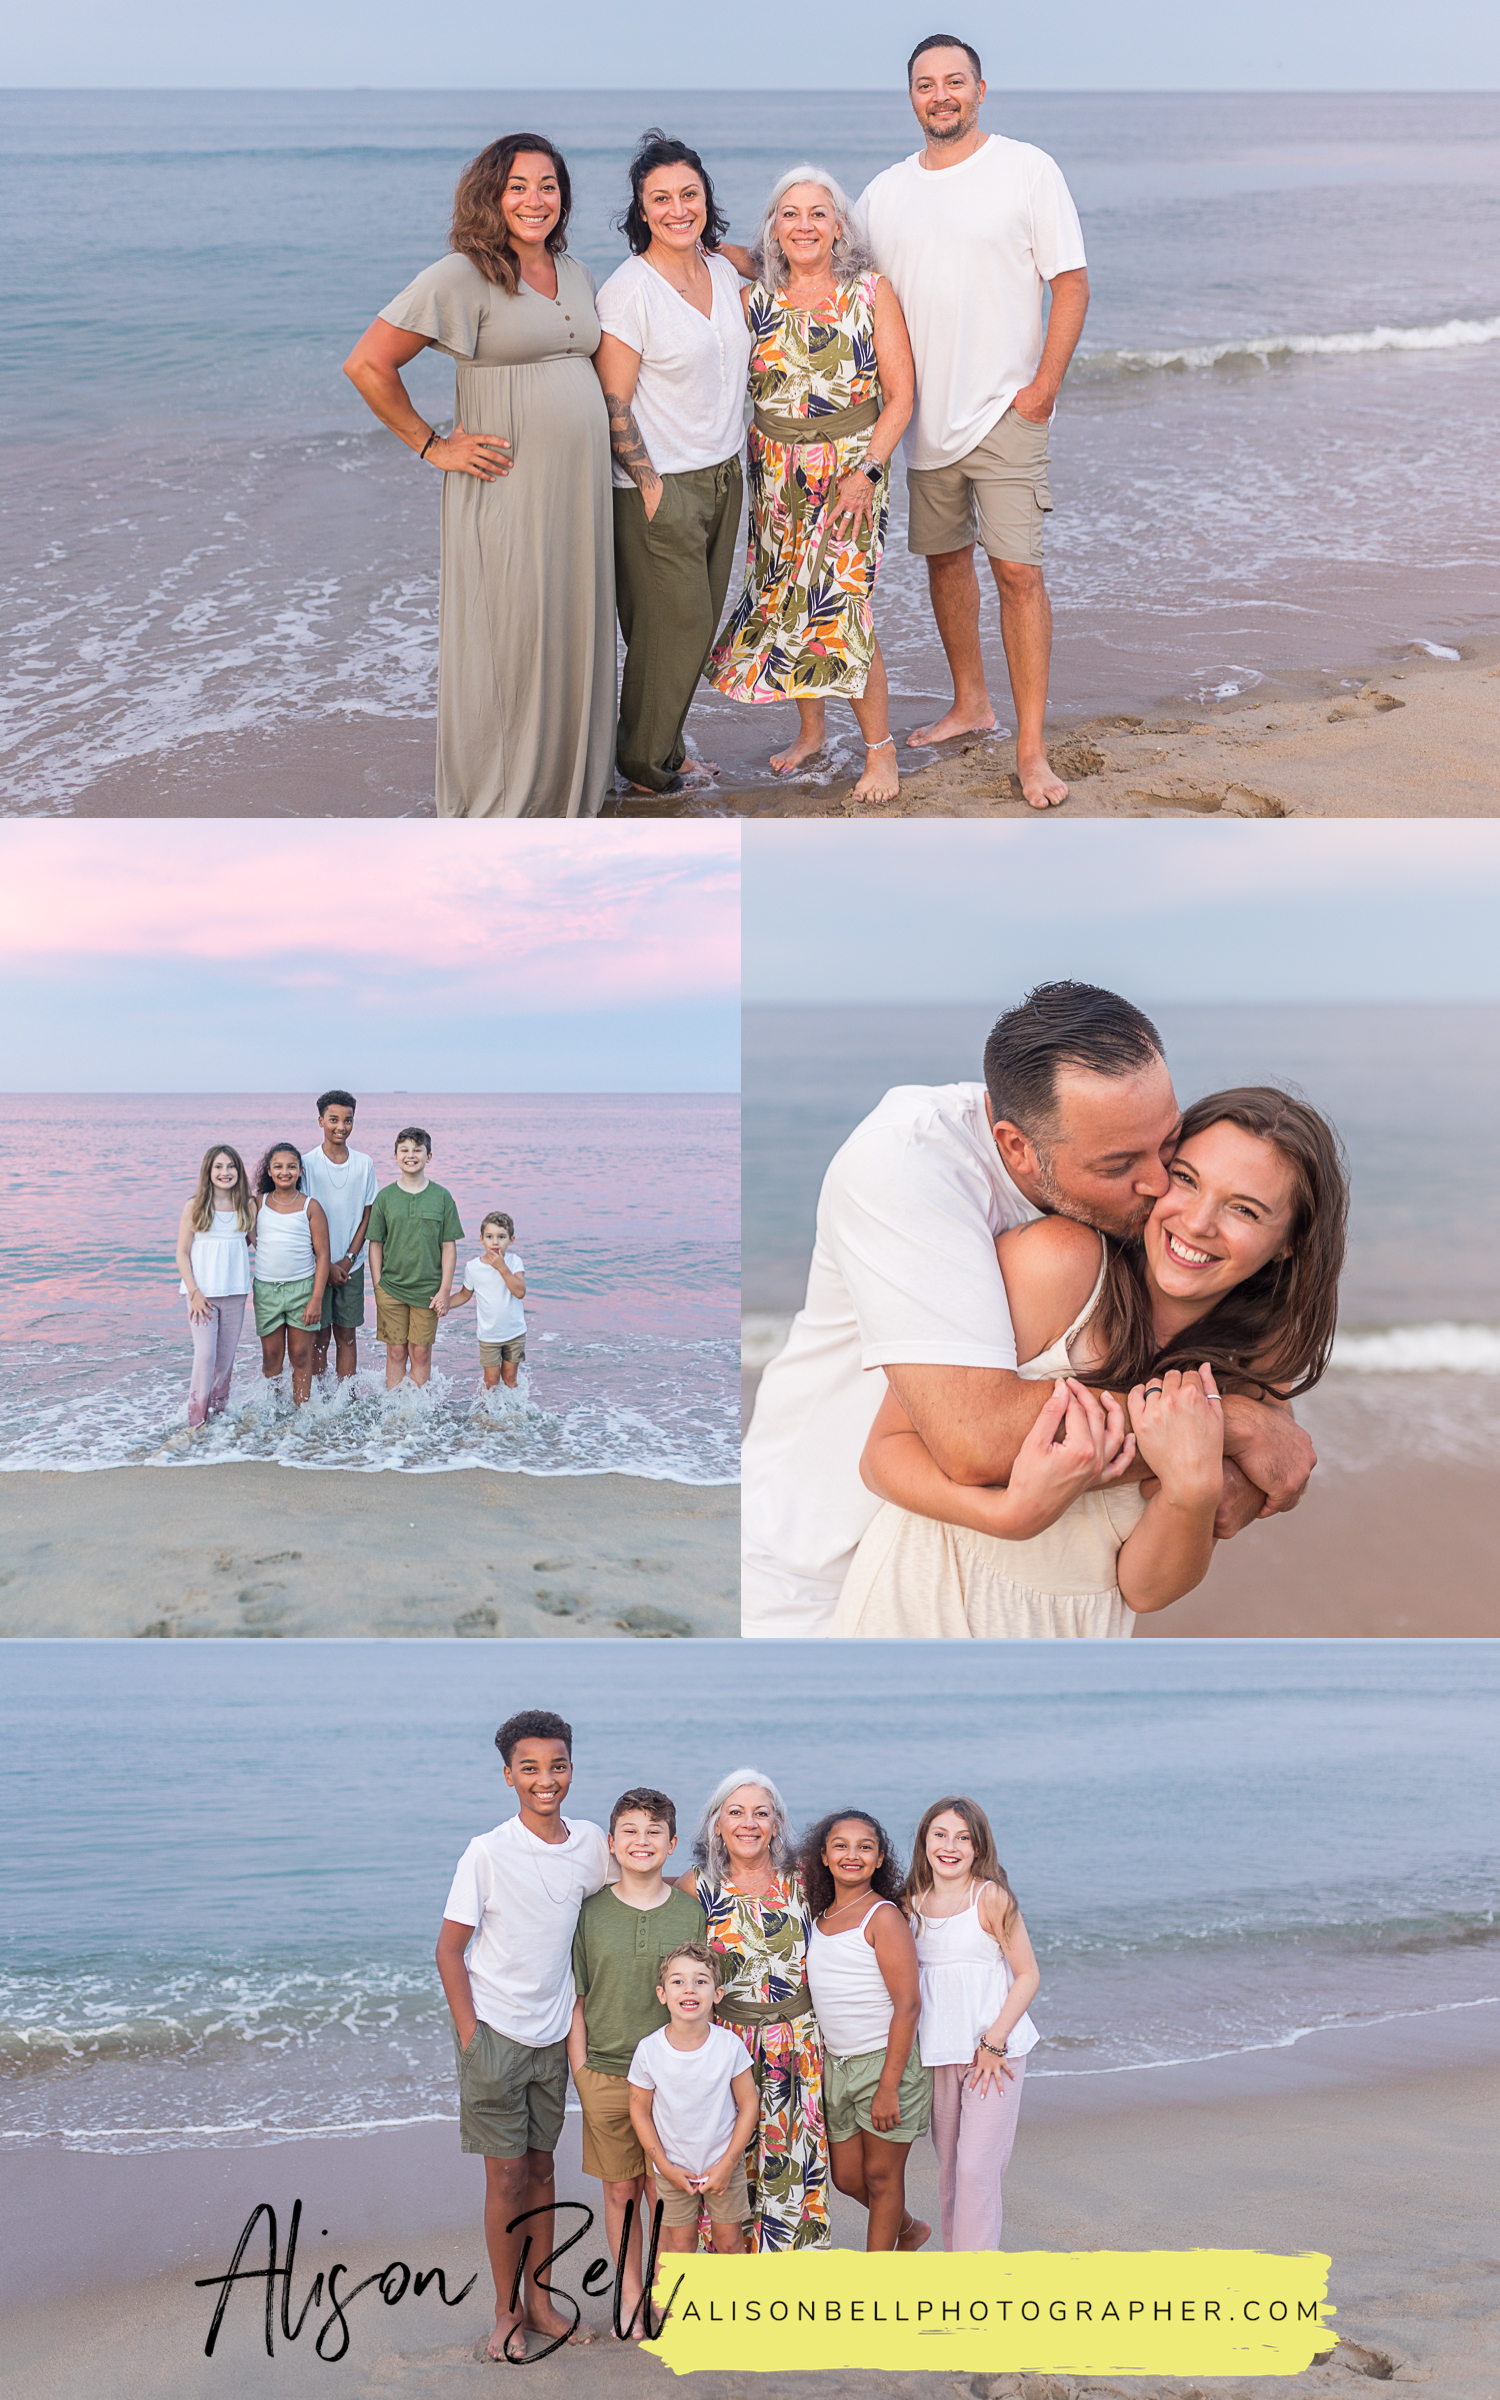 Extended family photographer on Croatan Beach in Virginia Beach, VA by Alison Bell, Photographer. Alisonbellphotographer.com